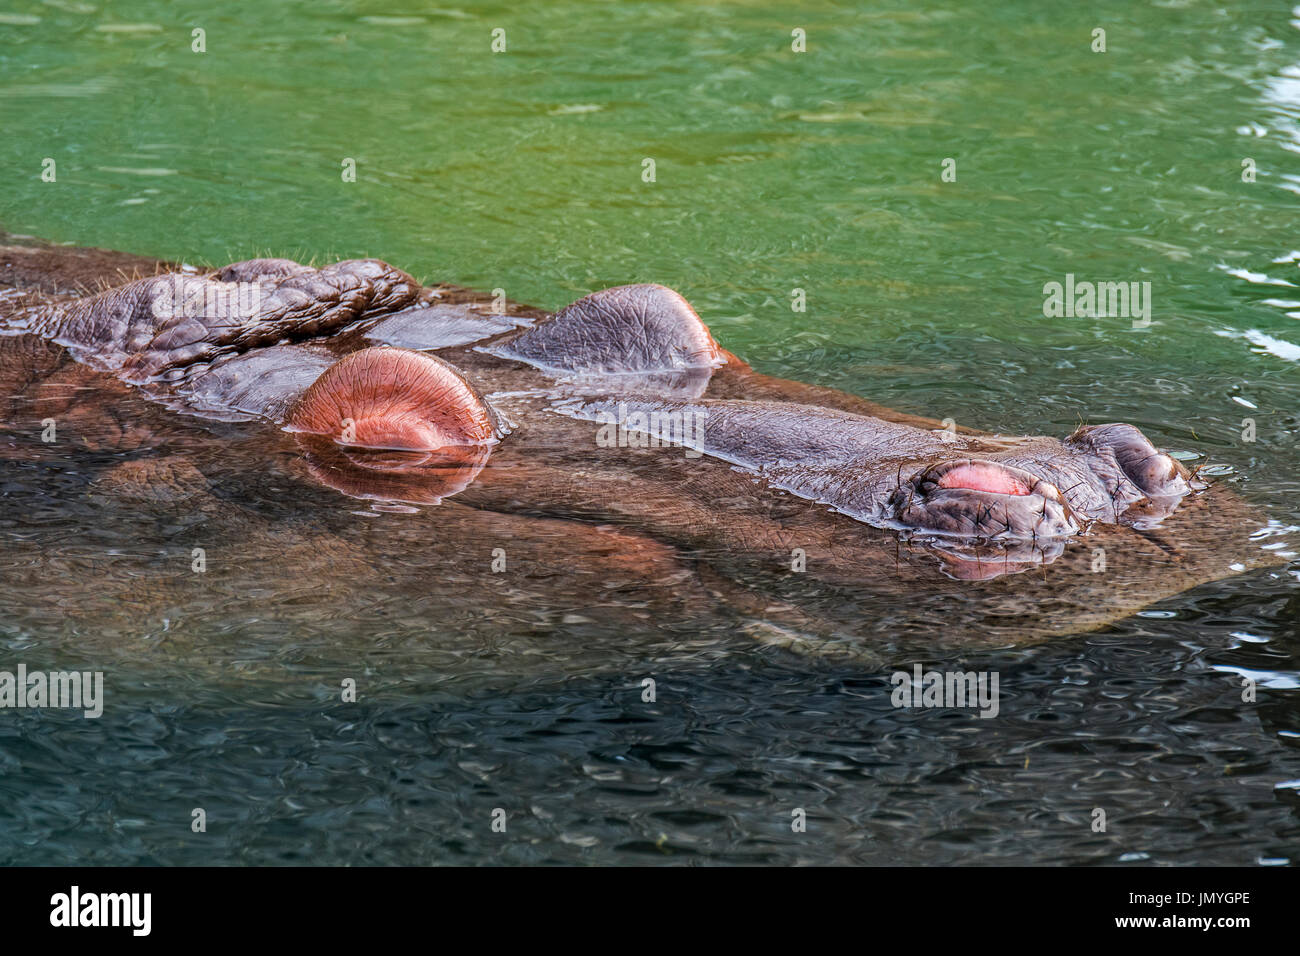 Submerged common hippopotamus / hippo (Hippopotamus amphibius) surfacing to breathe through exposed nostrils in water of river Stock Photo